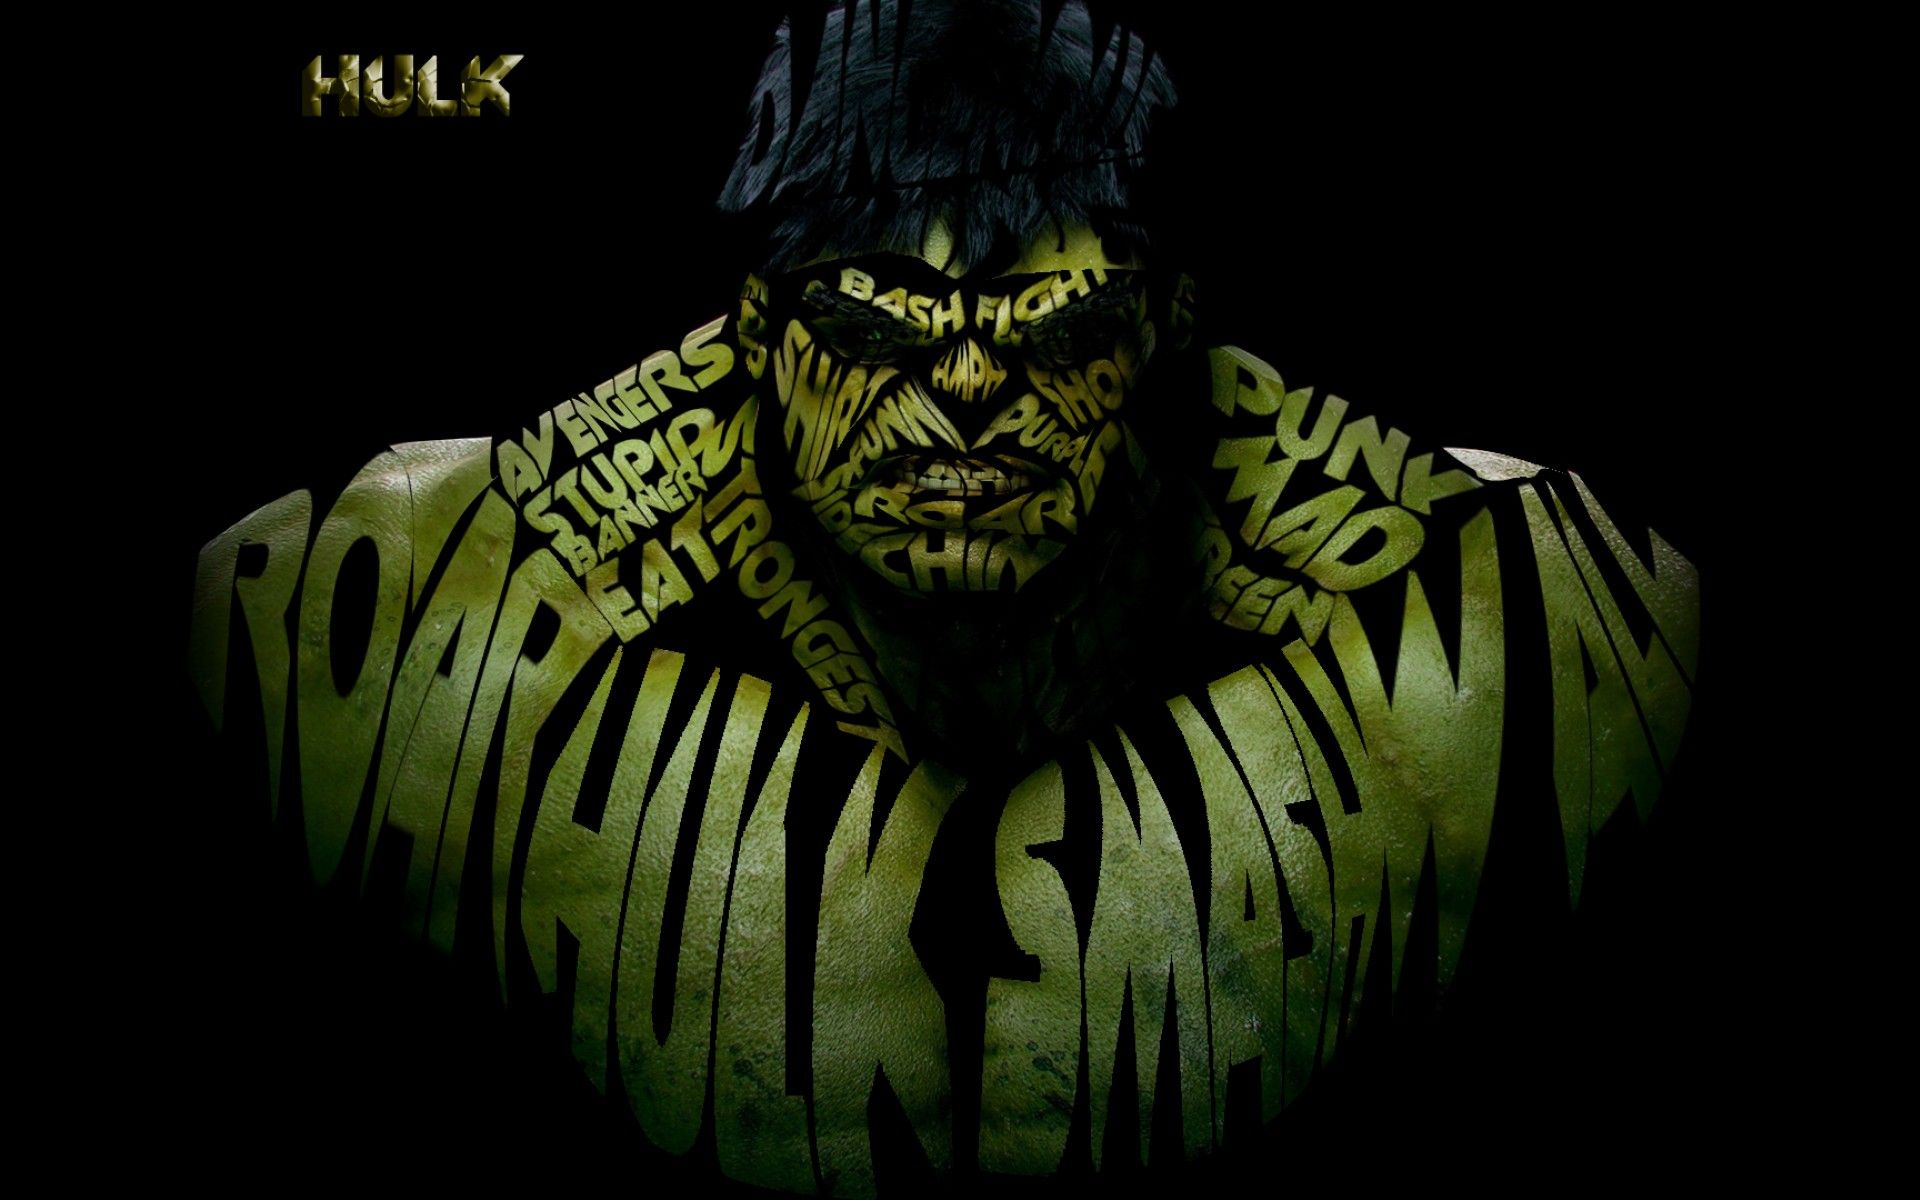 Marvel Hulk Wallpaper Top Background